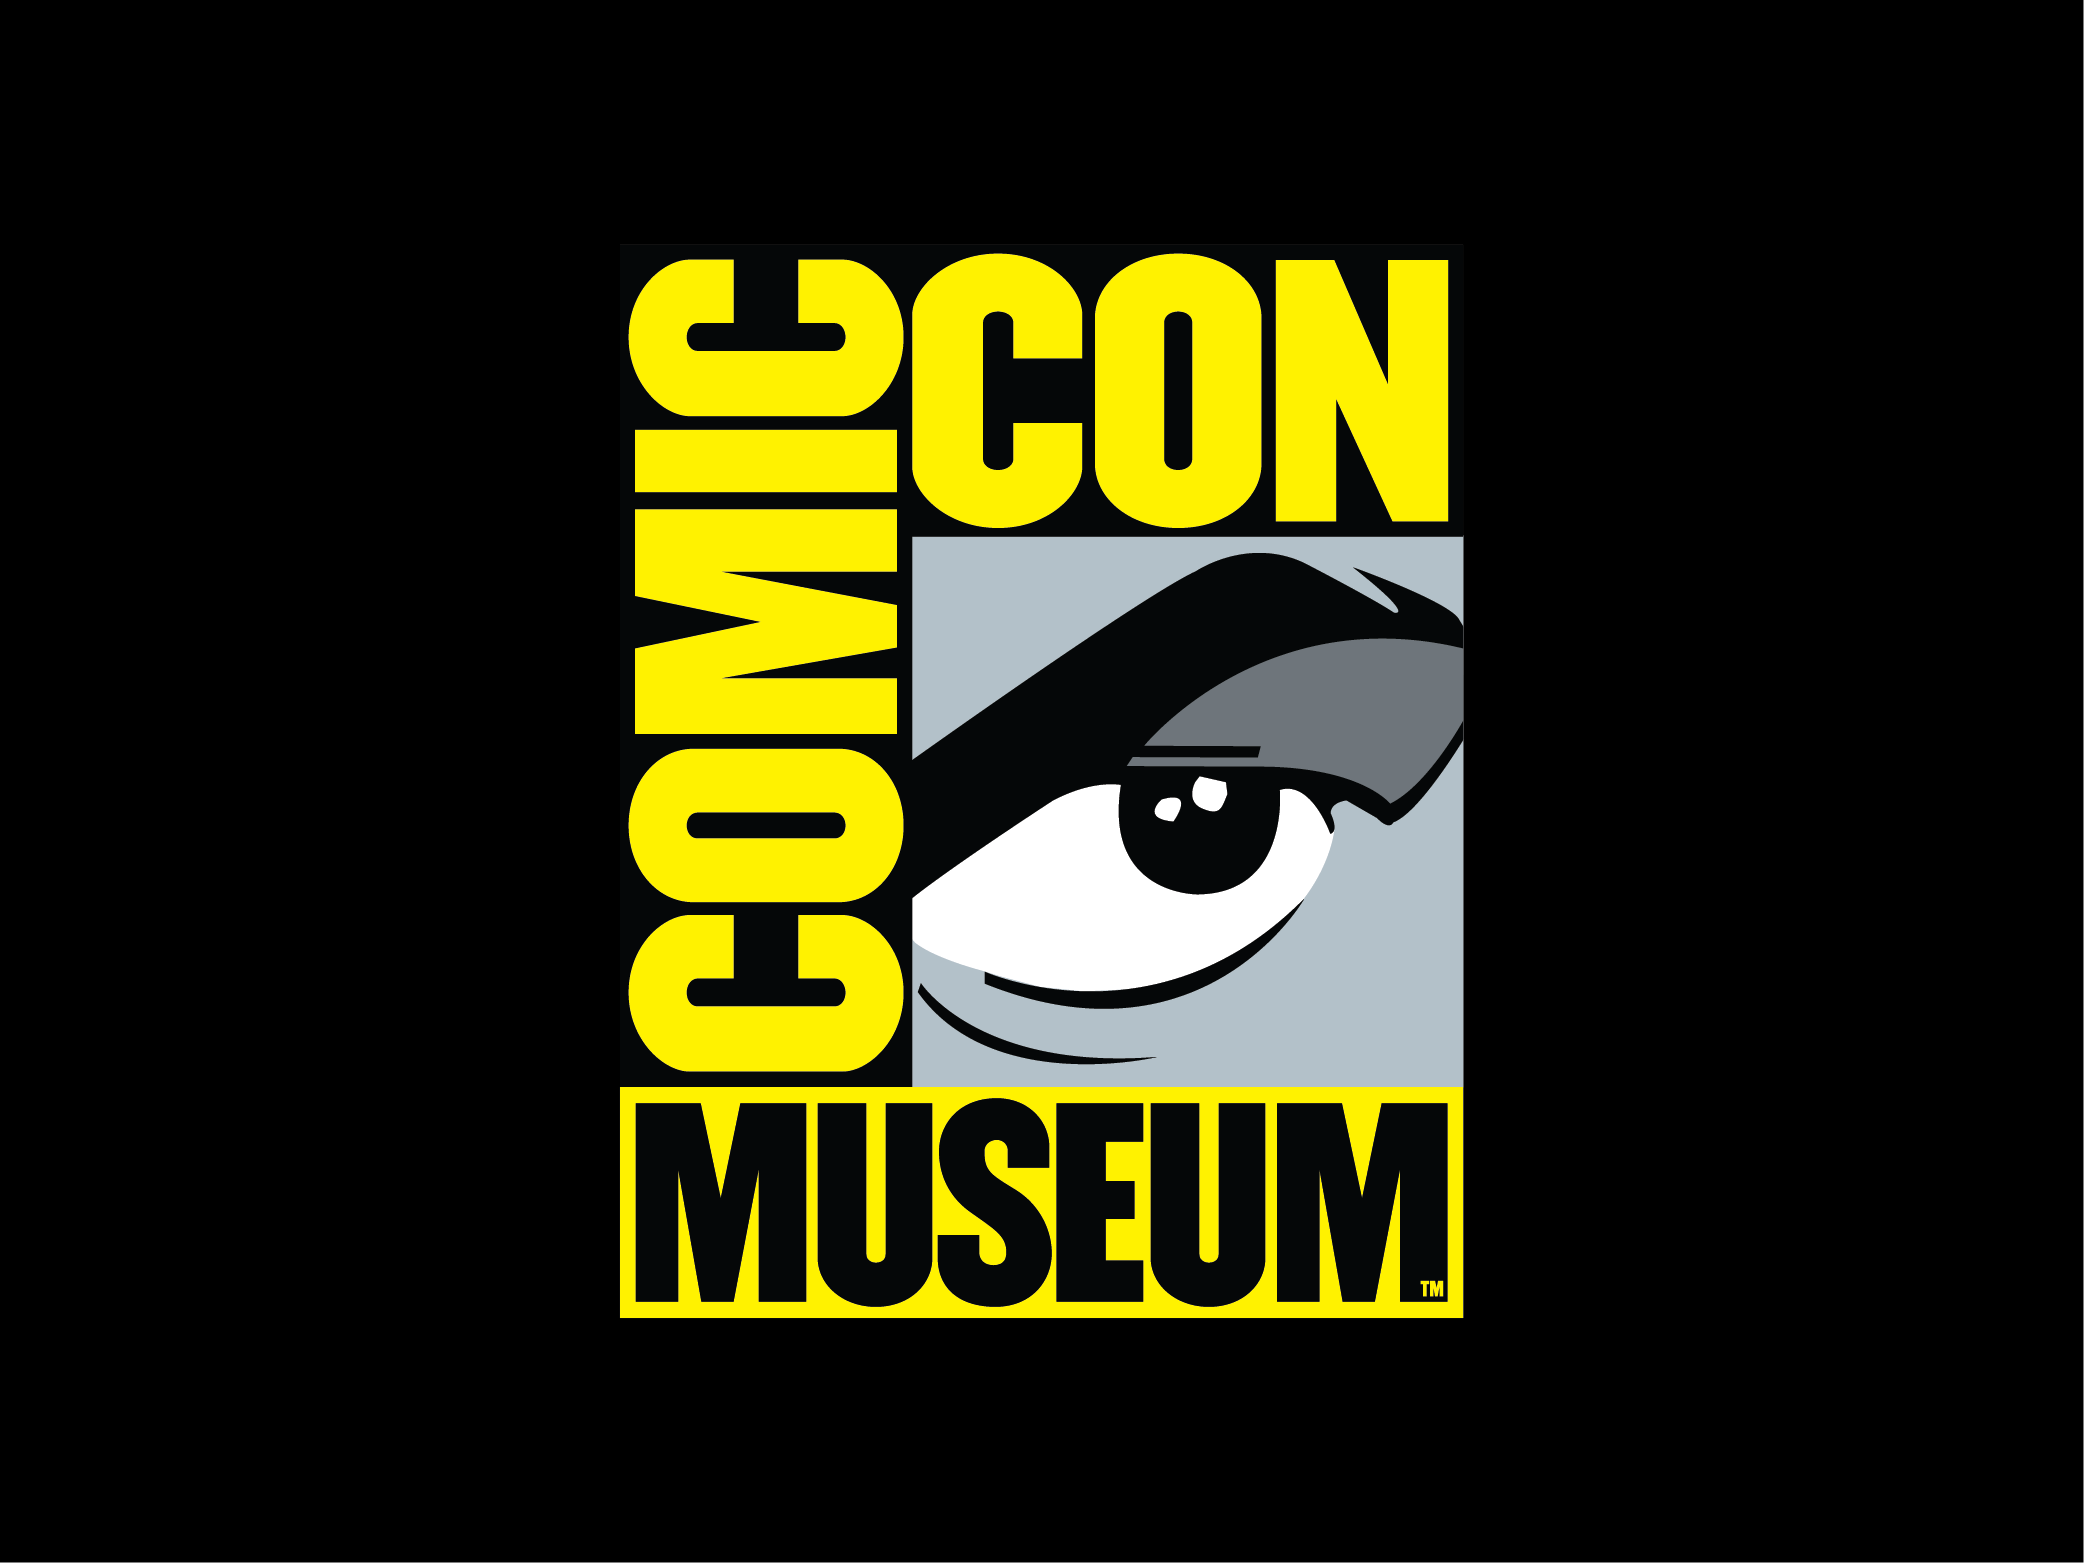 Comic-Con Museum logo image.